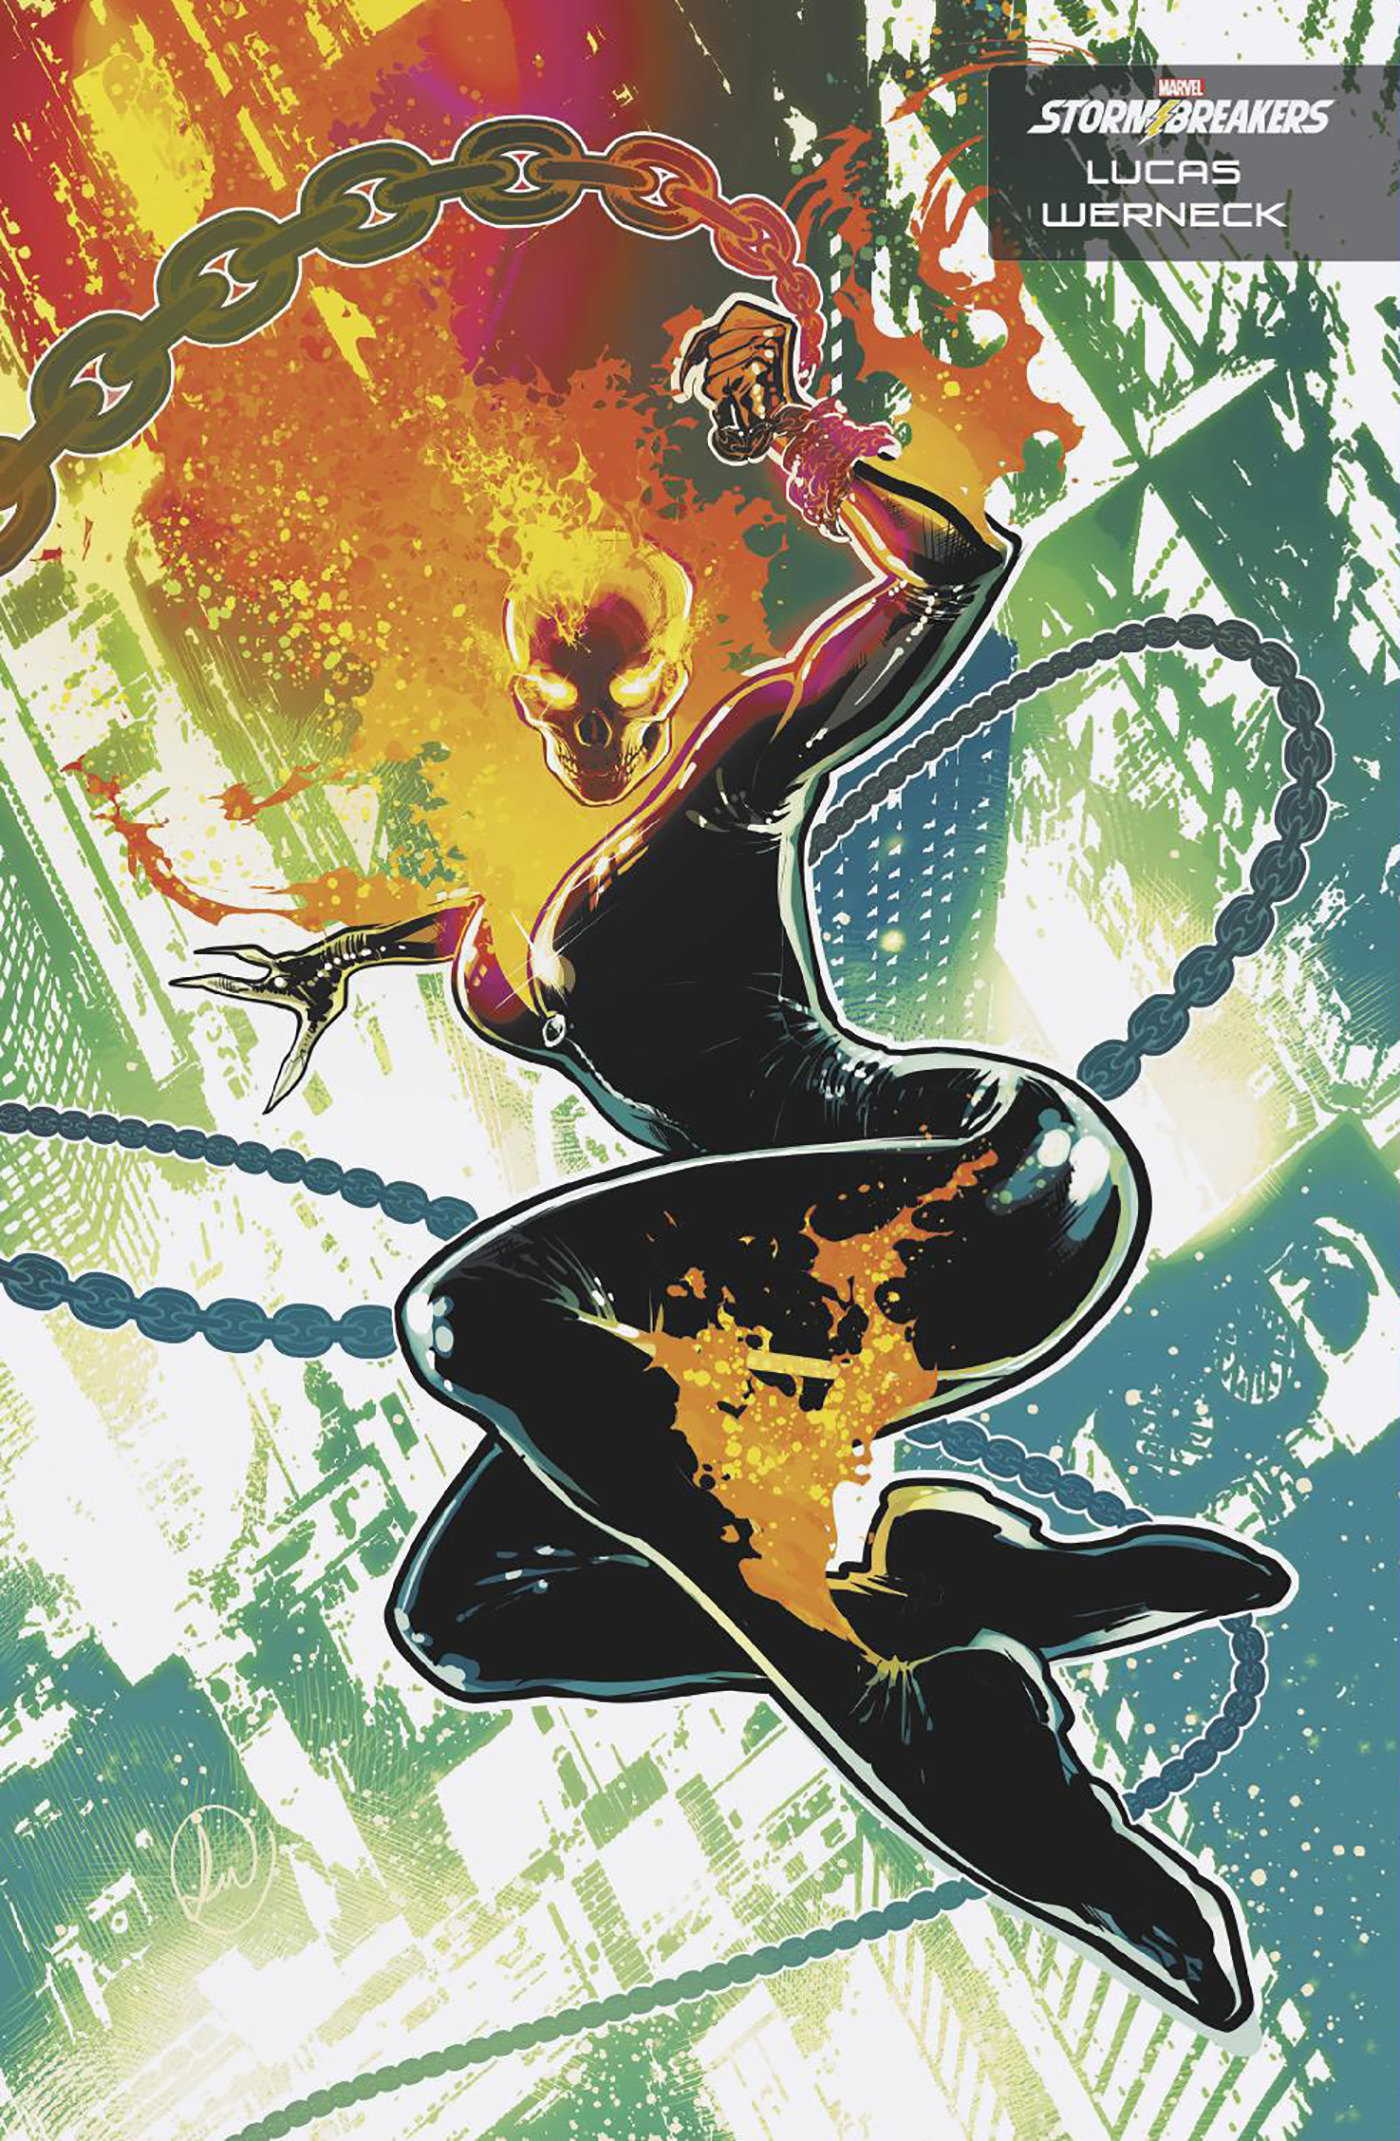 Amazing Spider-Man #49 Lucas Werneck Stormbreakers Variant (Blood Hunt)